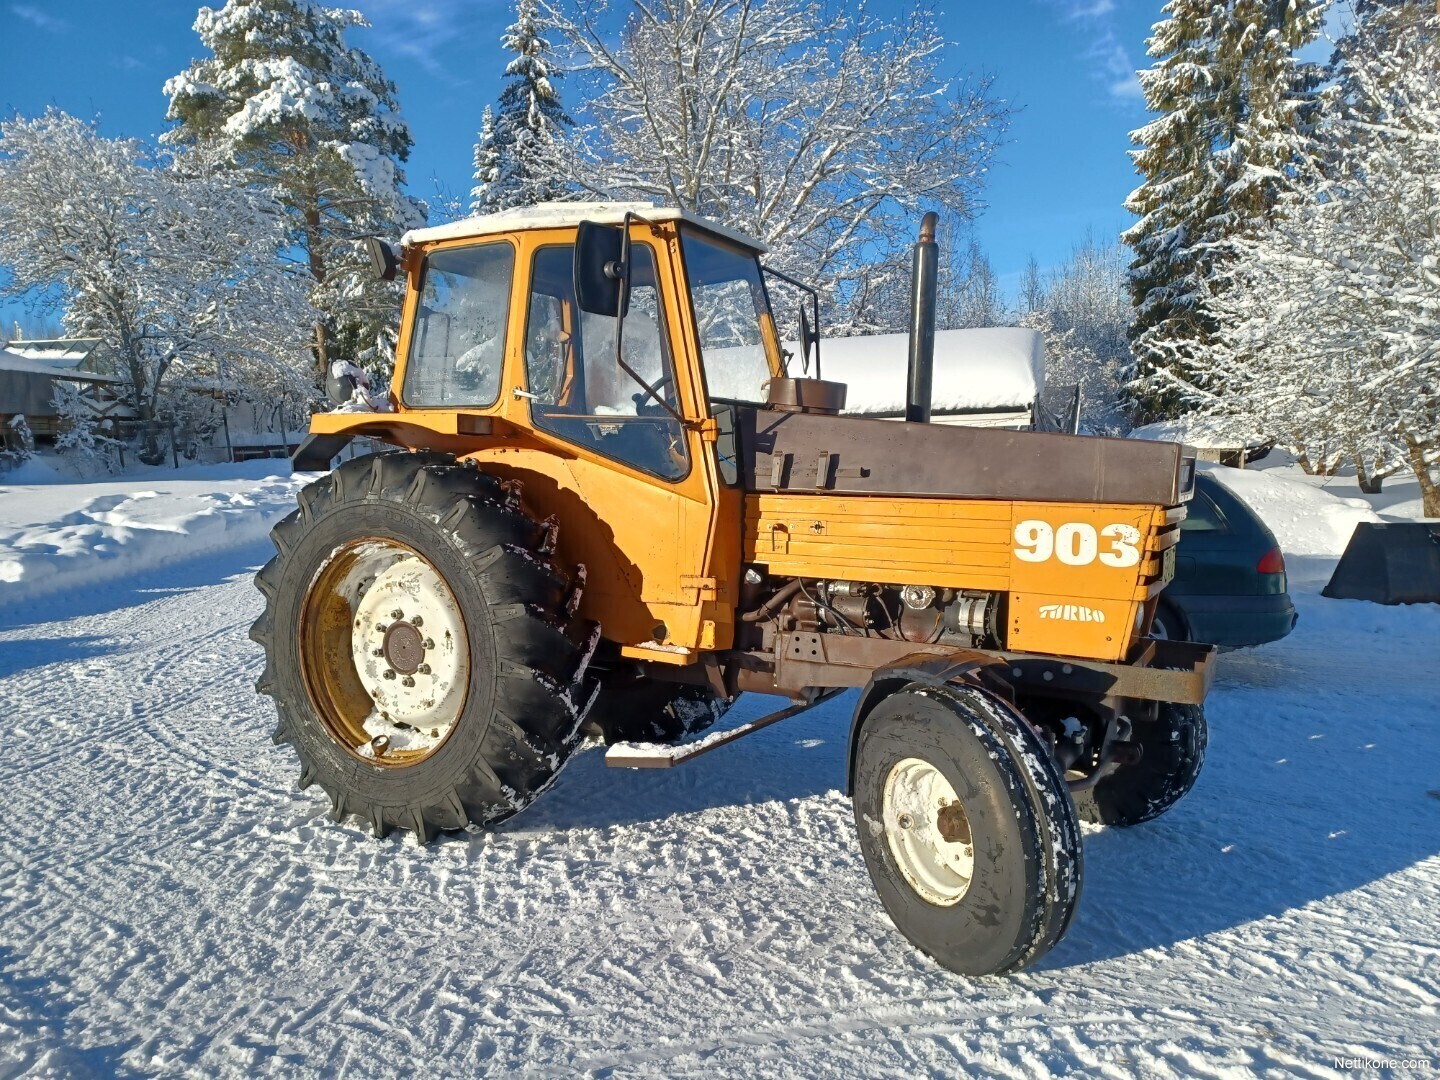 Valmet 903 tractors - Nettikone